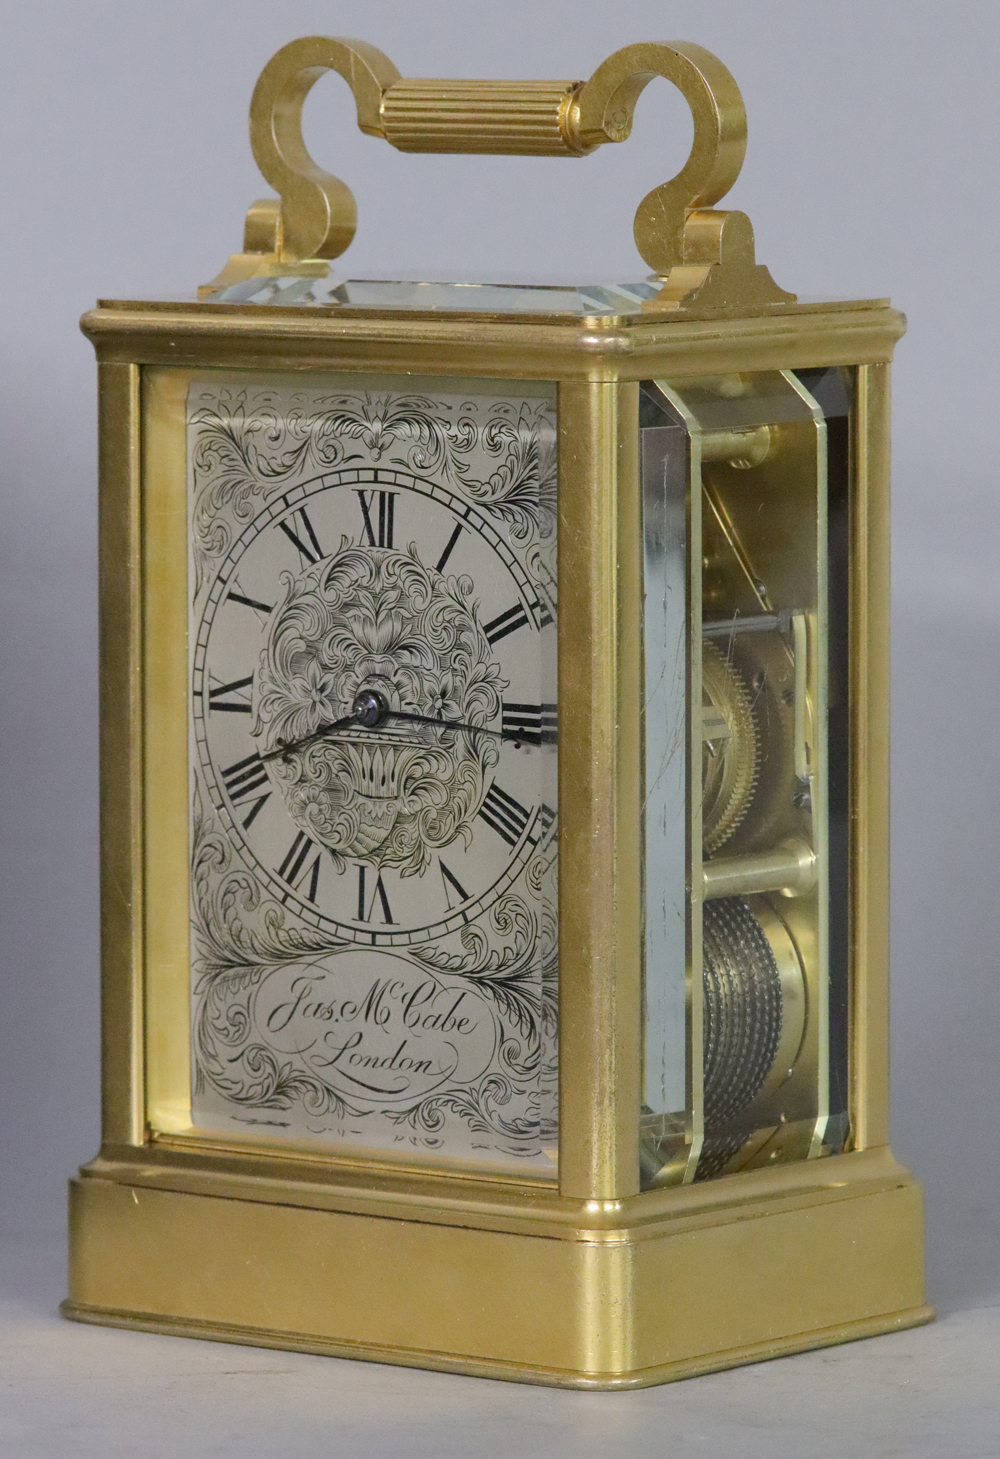 c.1840 English Ormolu Carriage Clock – James McCabe.